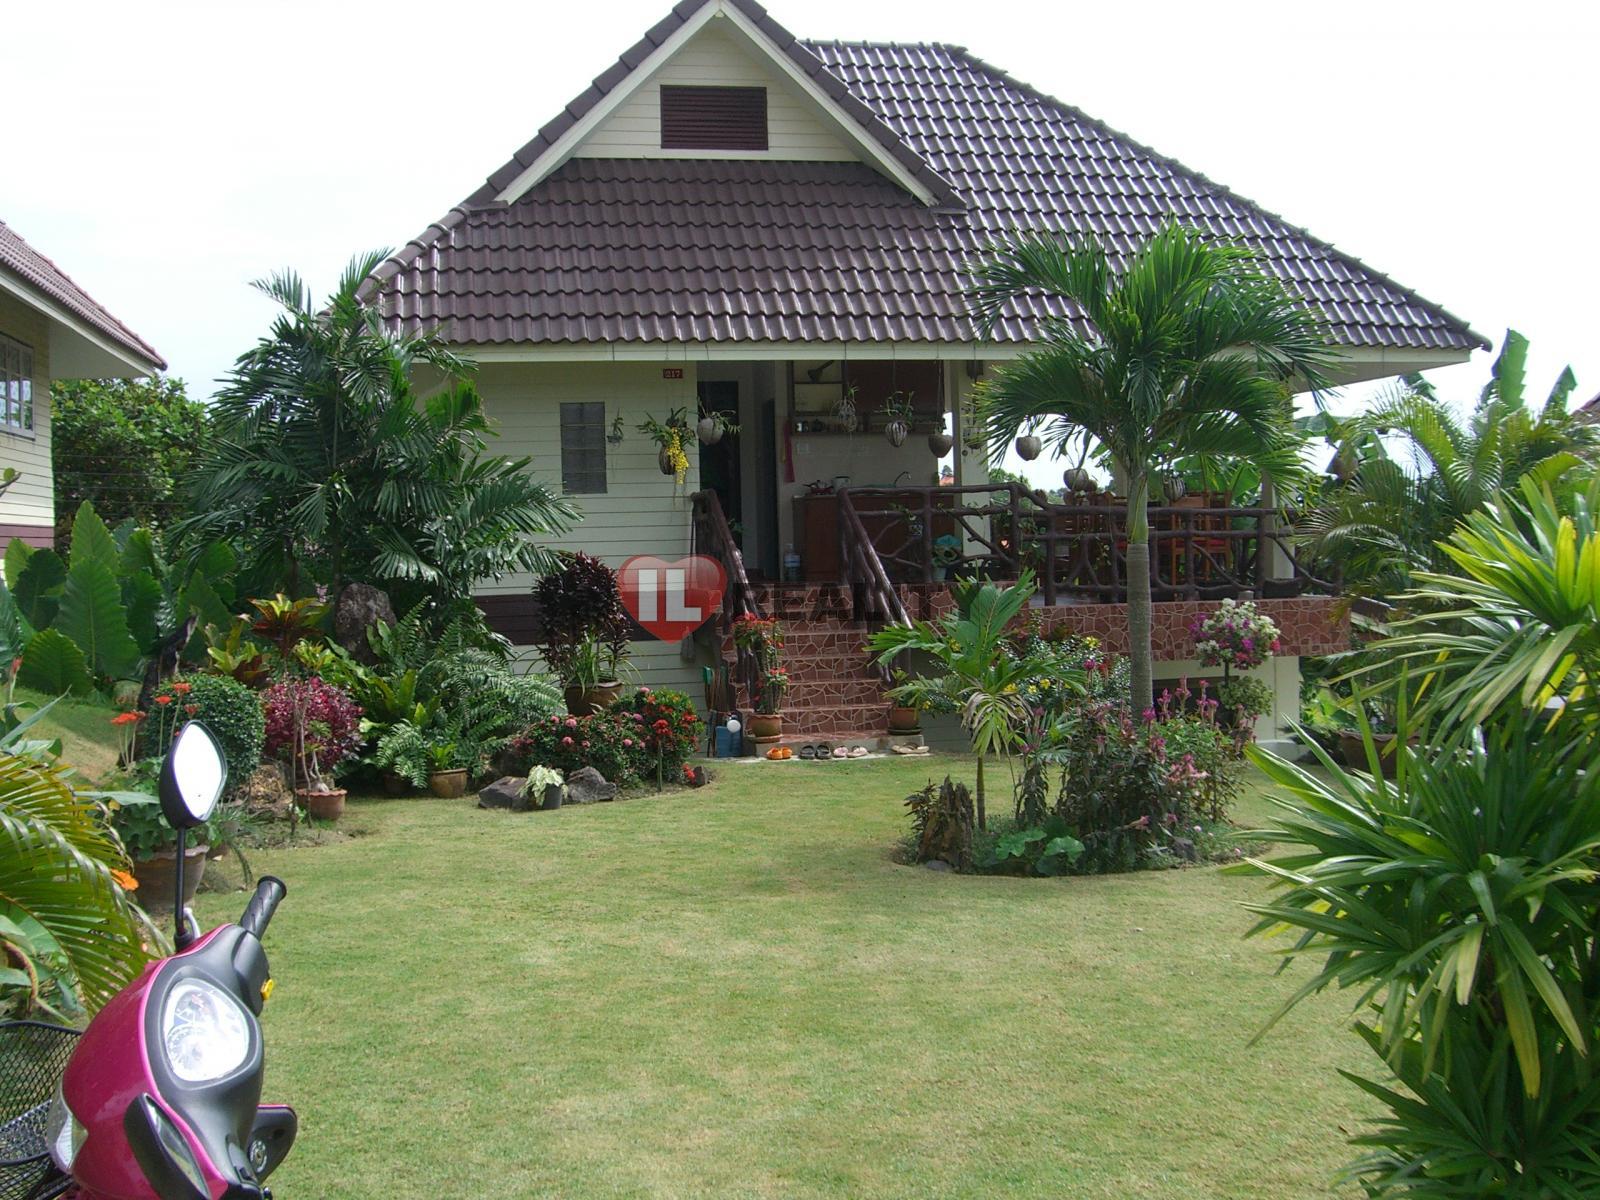 Prodej dům 4+kk, Ko Lanta Thajsko, zahrada, v resortu 2x bazén, ihned k dispozici, vše v dosahu , obrázek č. 3